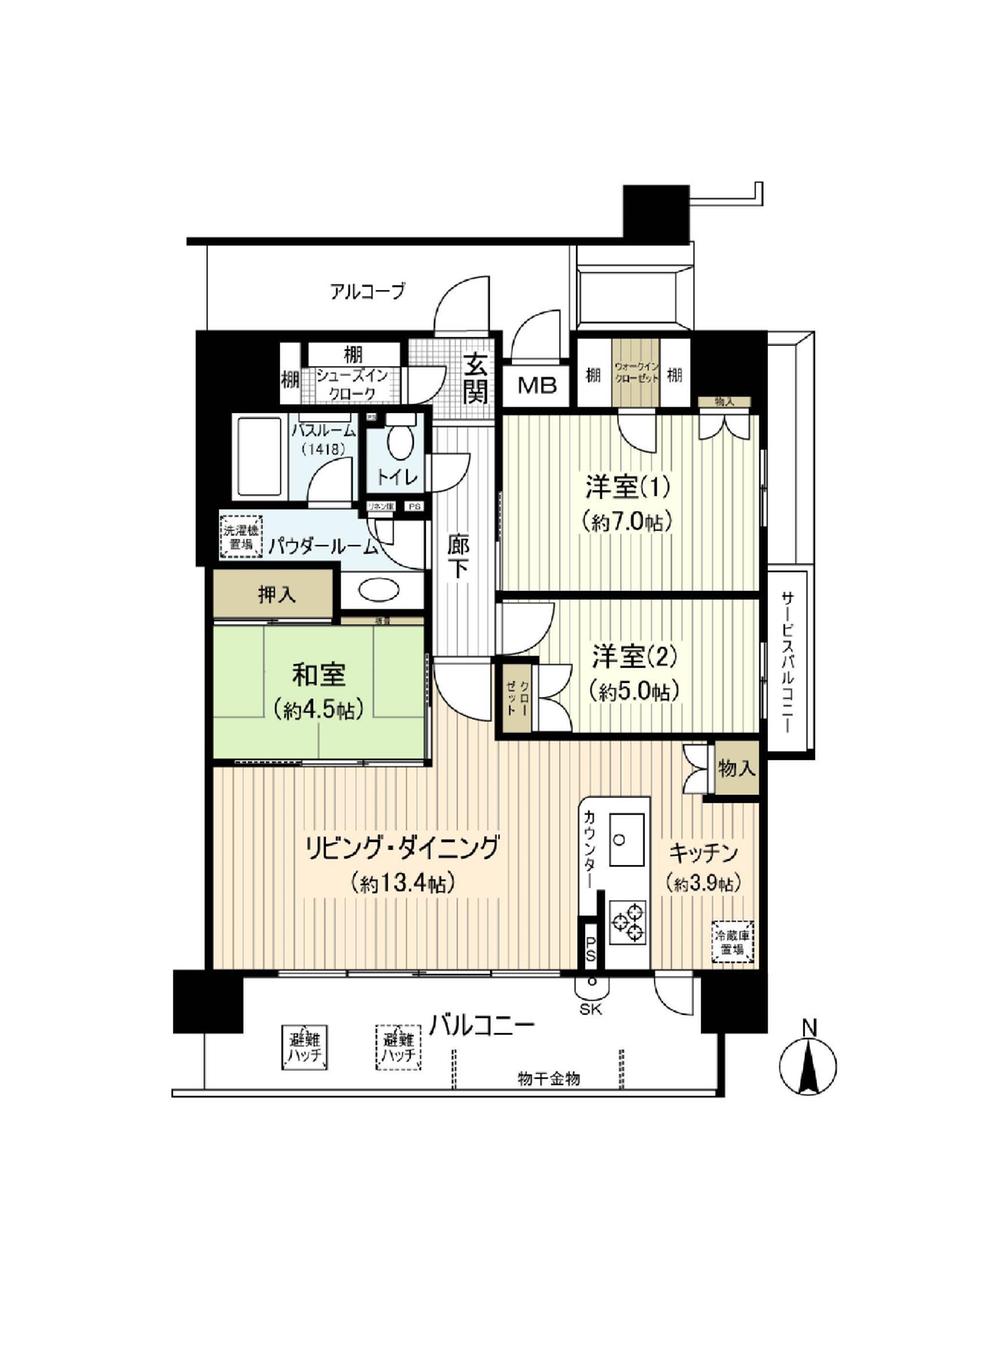 Floor plan. 3LDK, Price 28.8 million yen, Occupied area 79.11 sq m , Balcony area 13.96 sq m